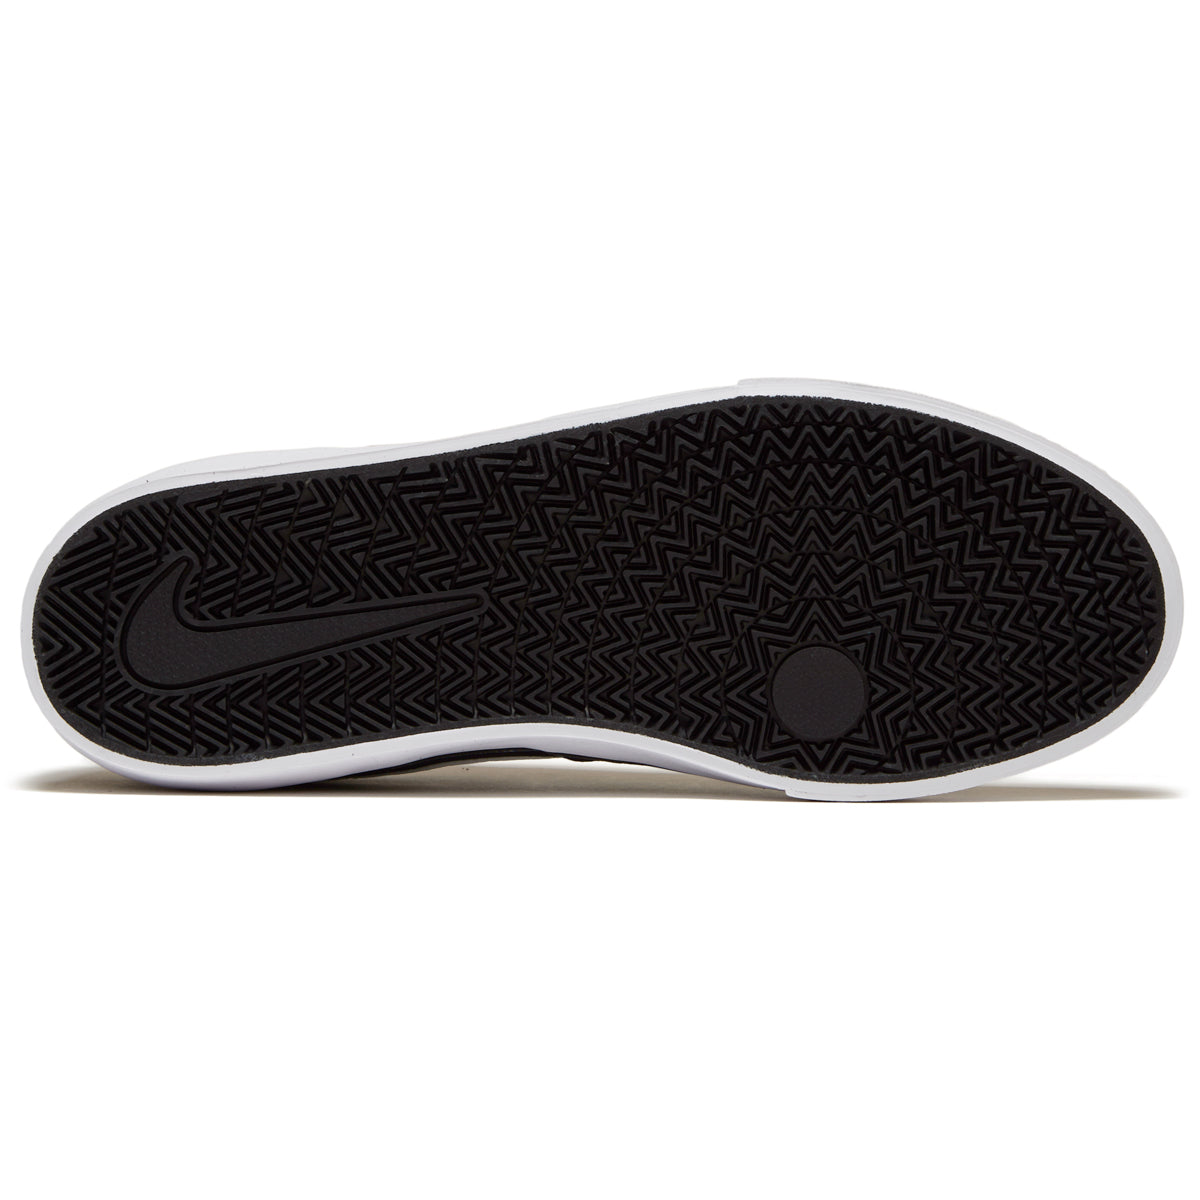 Nike SB Chron 2 Shoes - Black/White/Black image 4